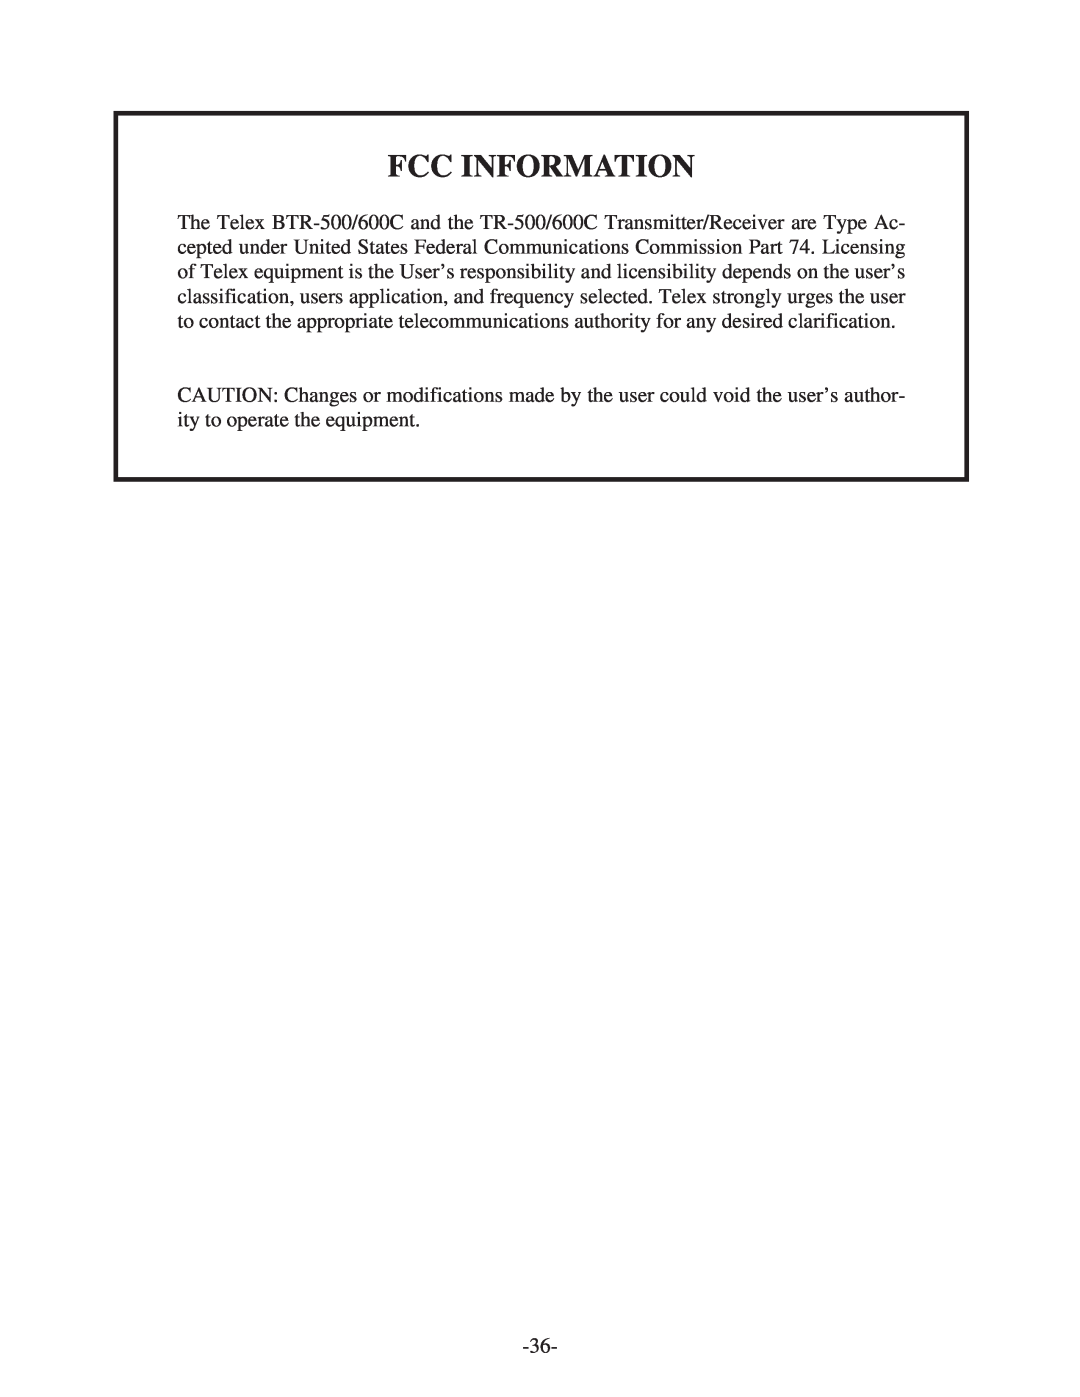 Telex BTR-500/600C operating instructions Fcc Information 